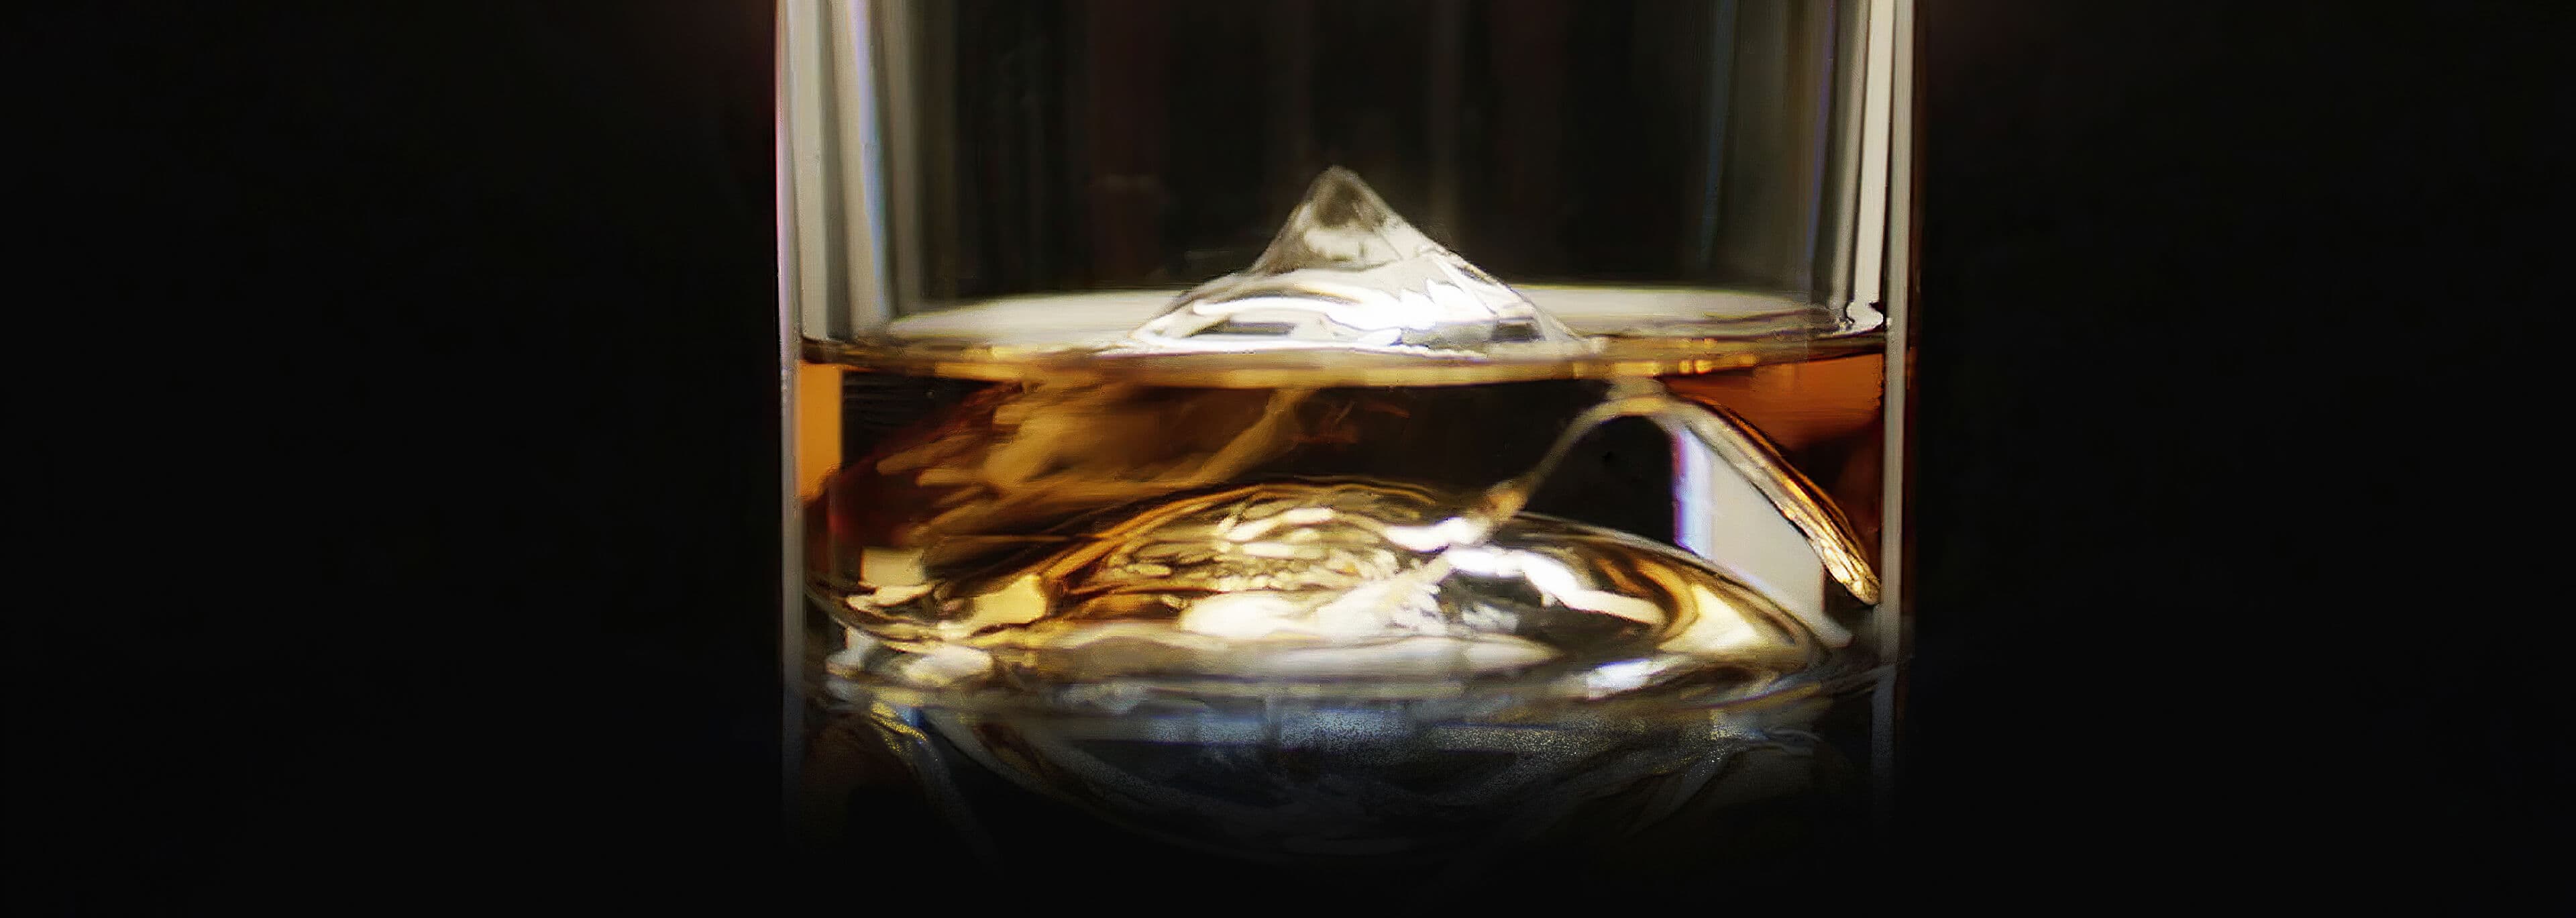 LIITON Grand Canyon Whiskey Glass Set of 4